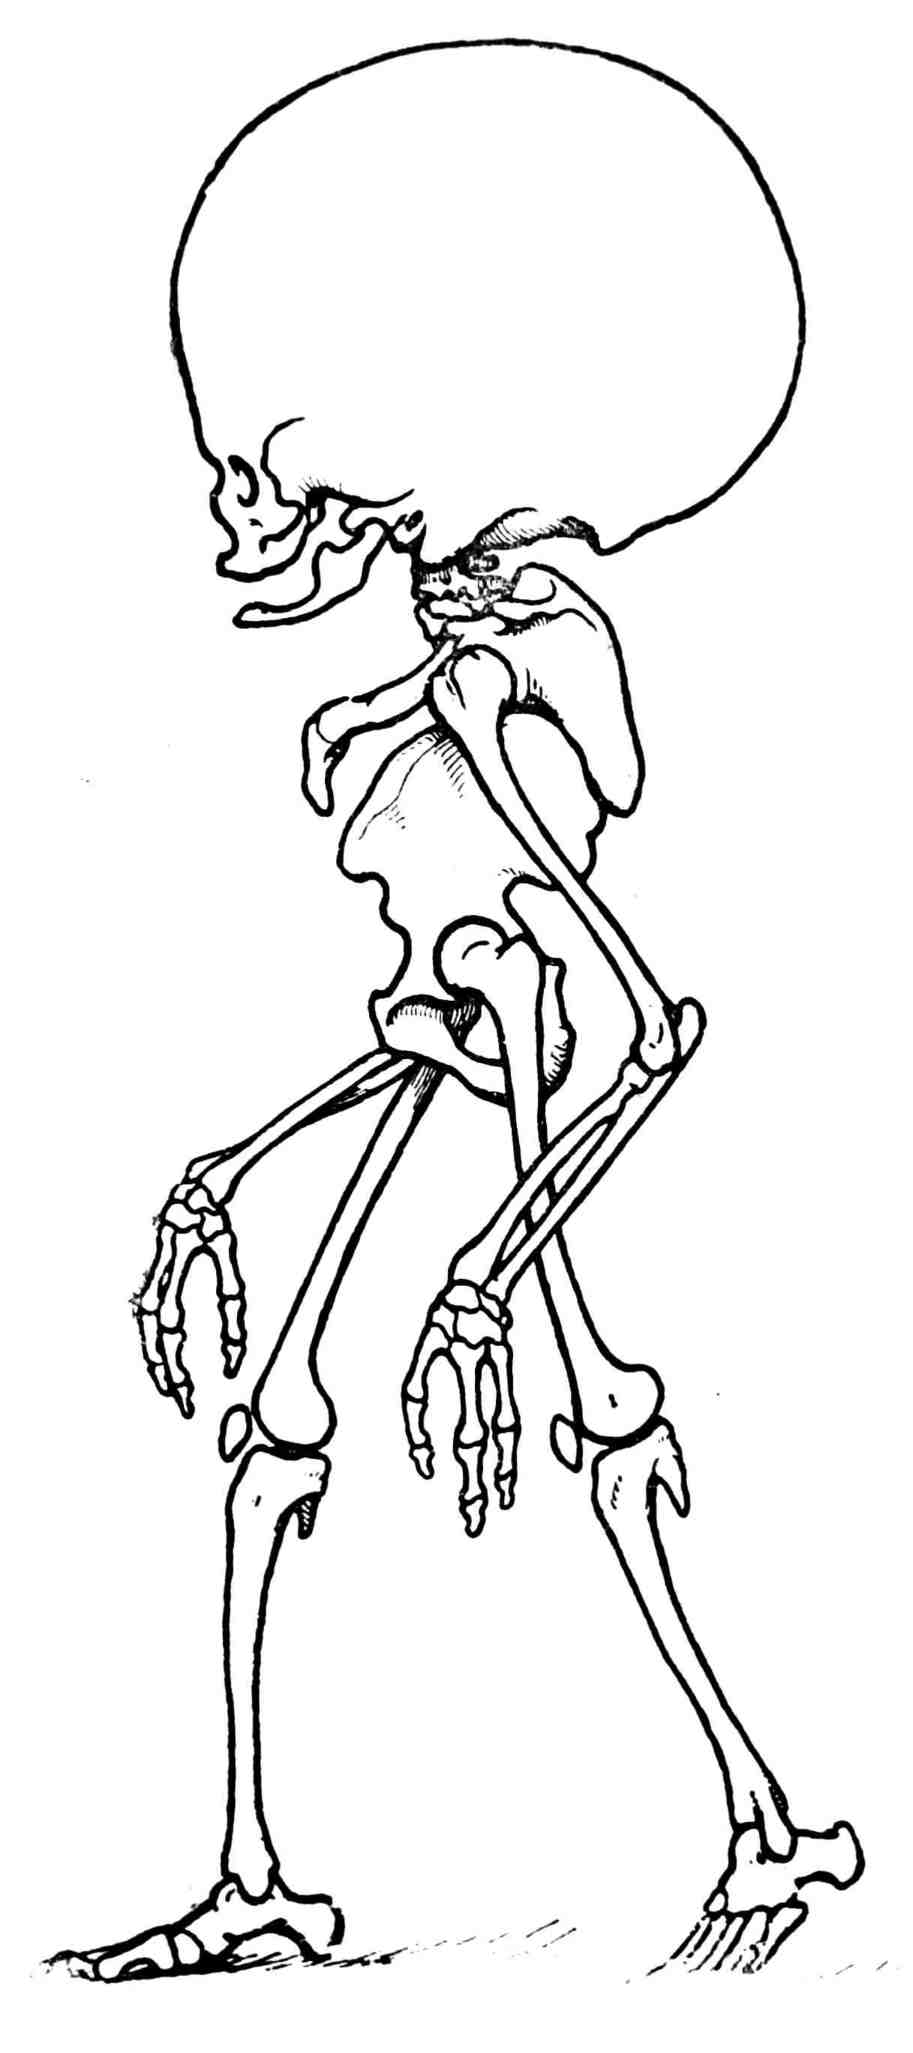 Рис. 334. Скелет будущего человека (Homo sapientissimus).